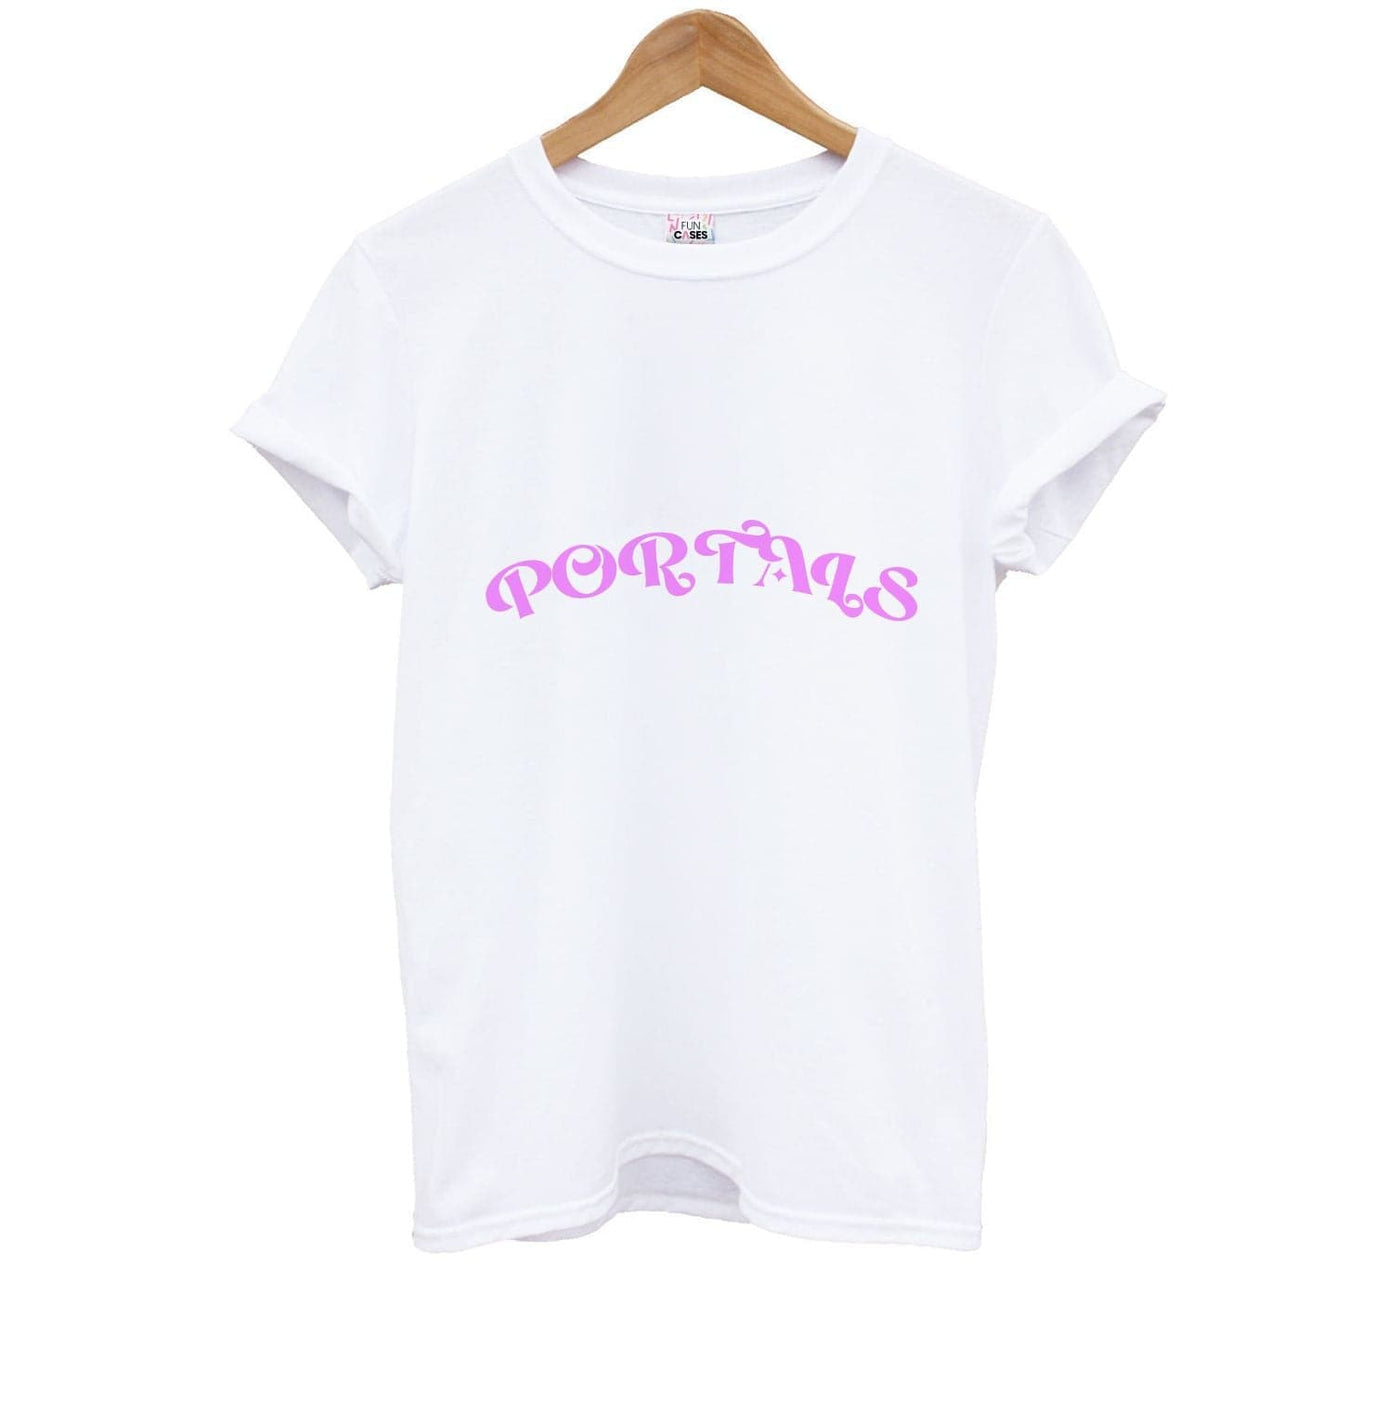 Portals - Melanie Martinez Kids T-Shirt